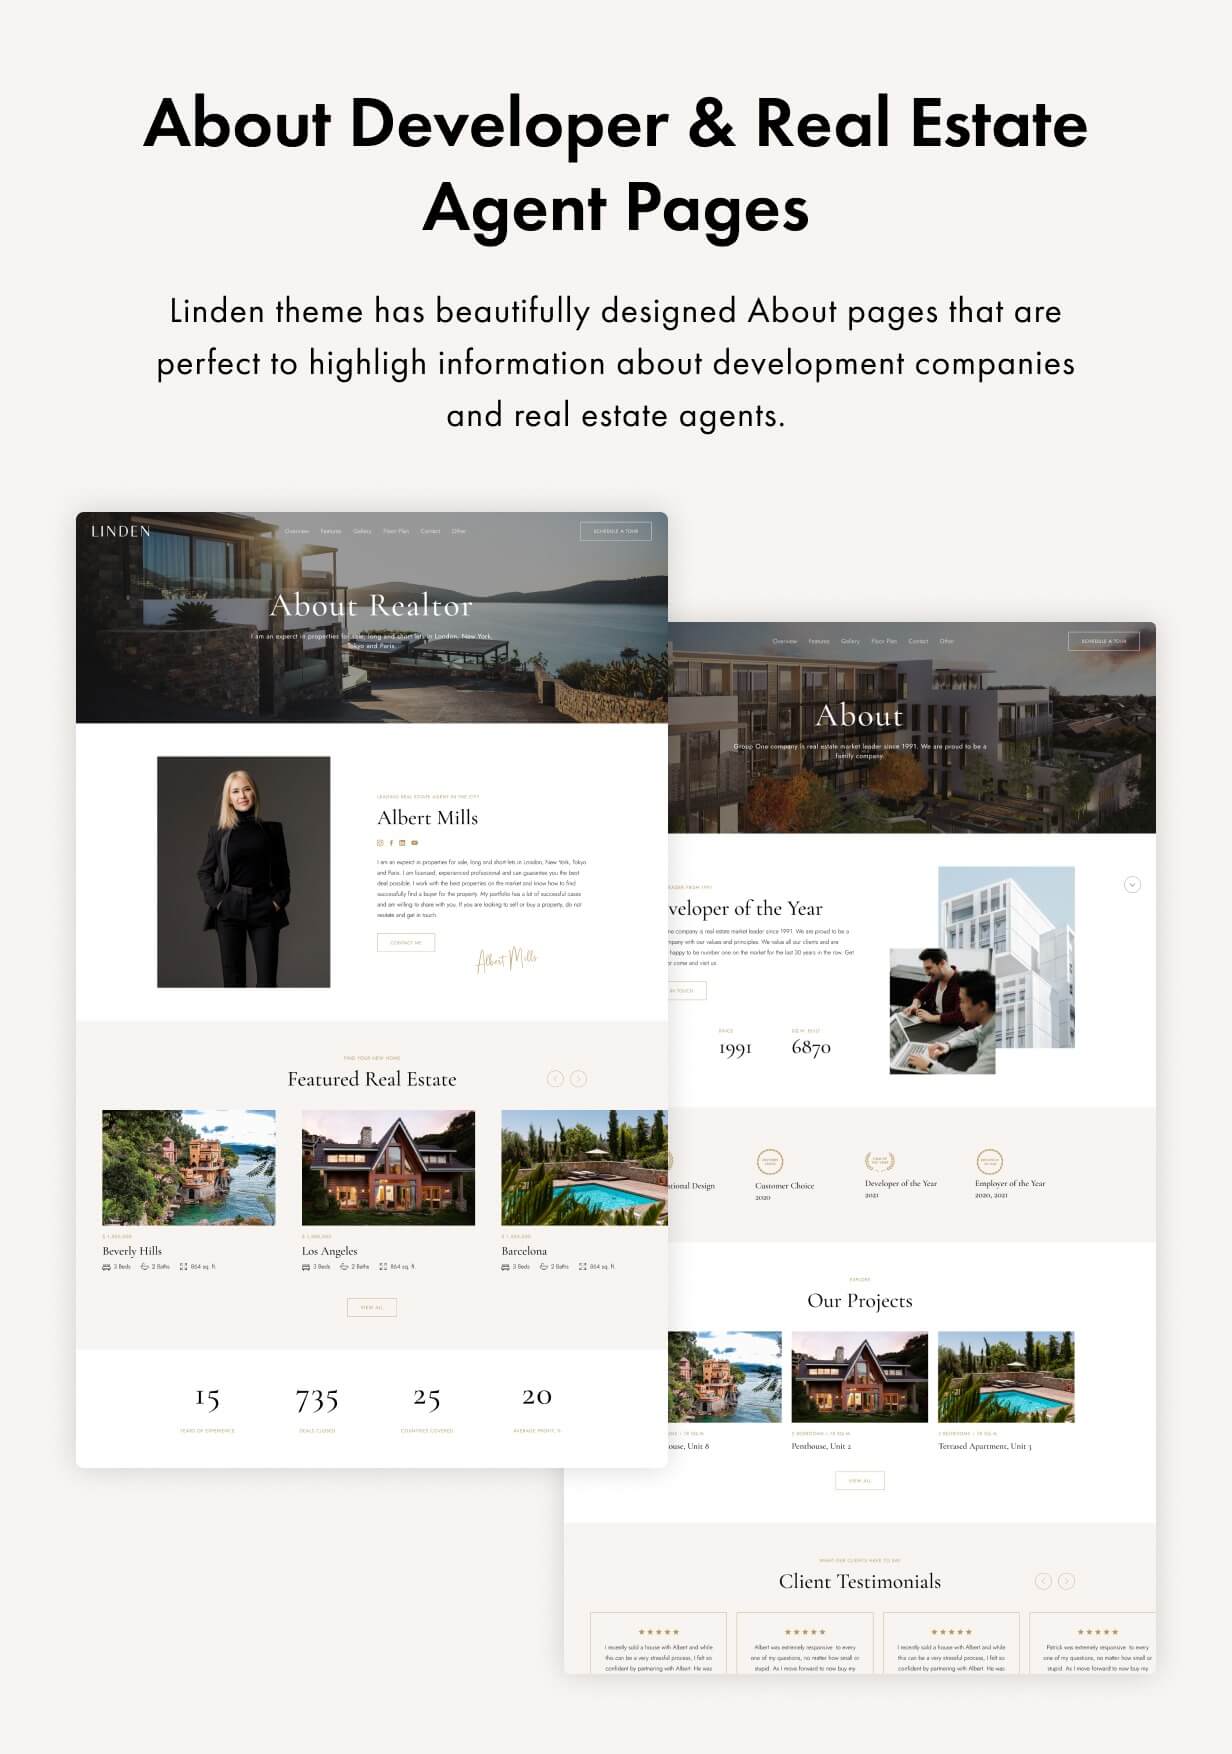 Linden — Single Property WordPress Theme